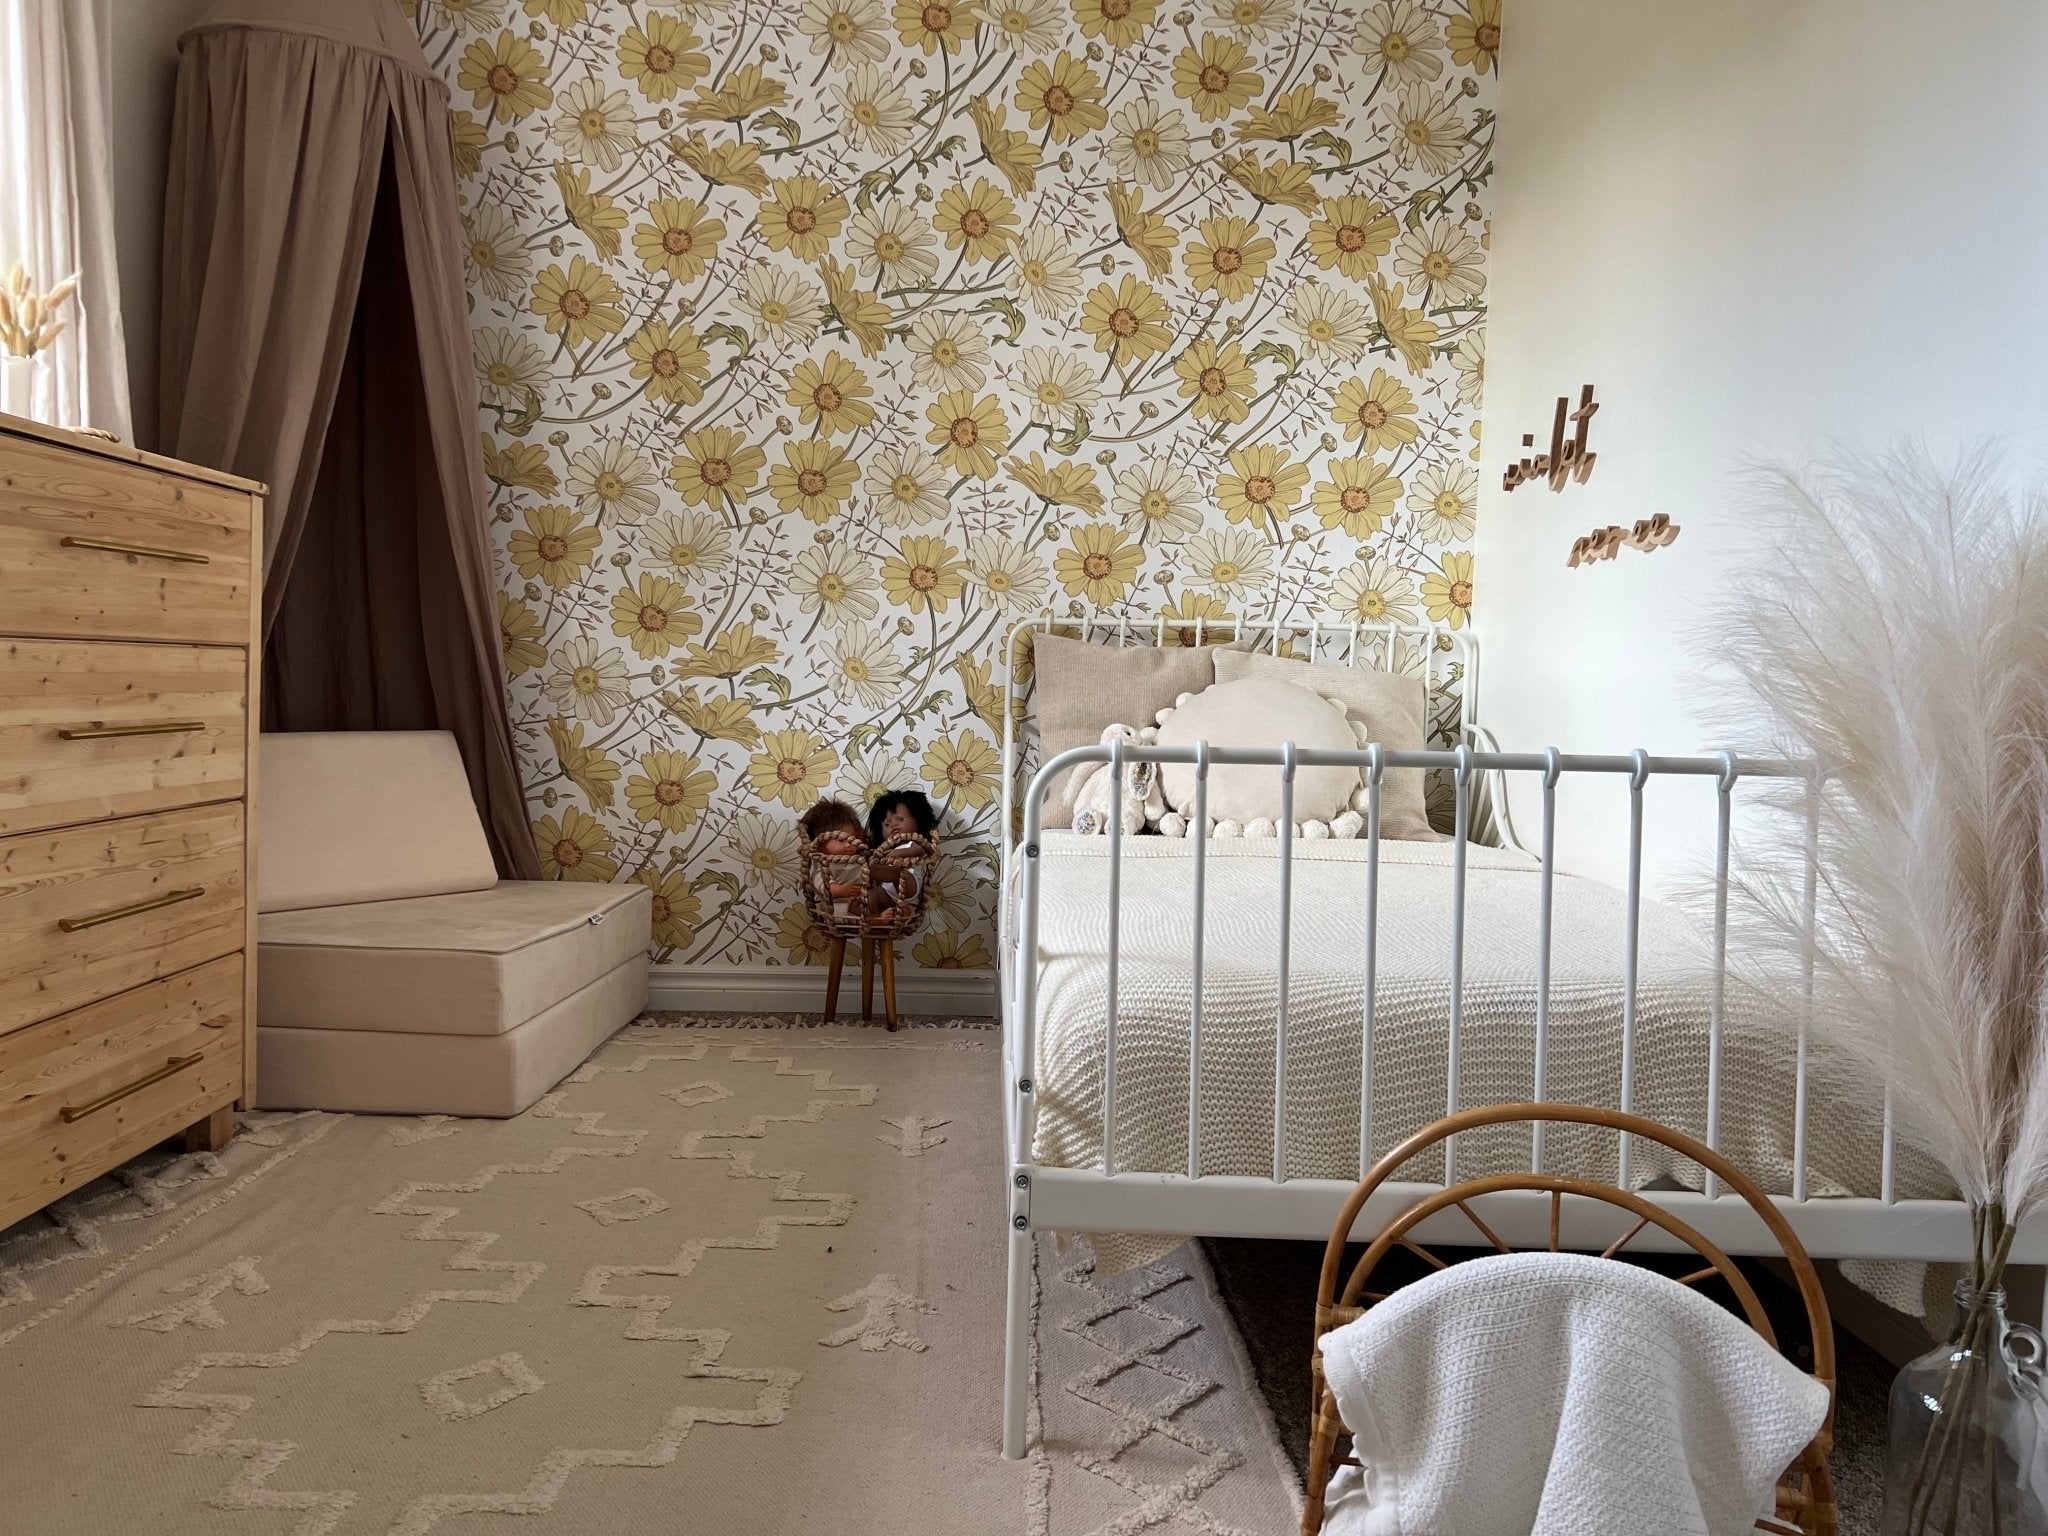 AMAZING WALL Home Modern Peel and Stick Shiny Film Kids Nursery Room  Pattern Wallpaper Self Adhesive Bedroom